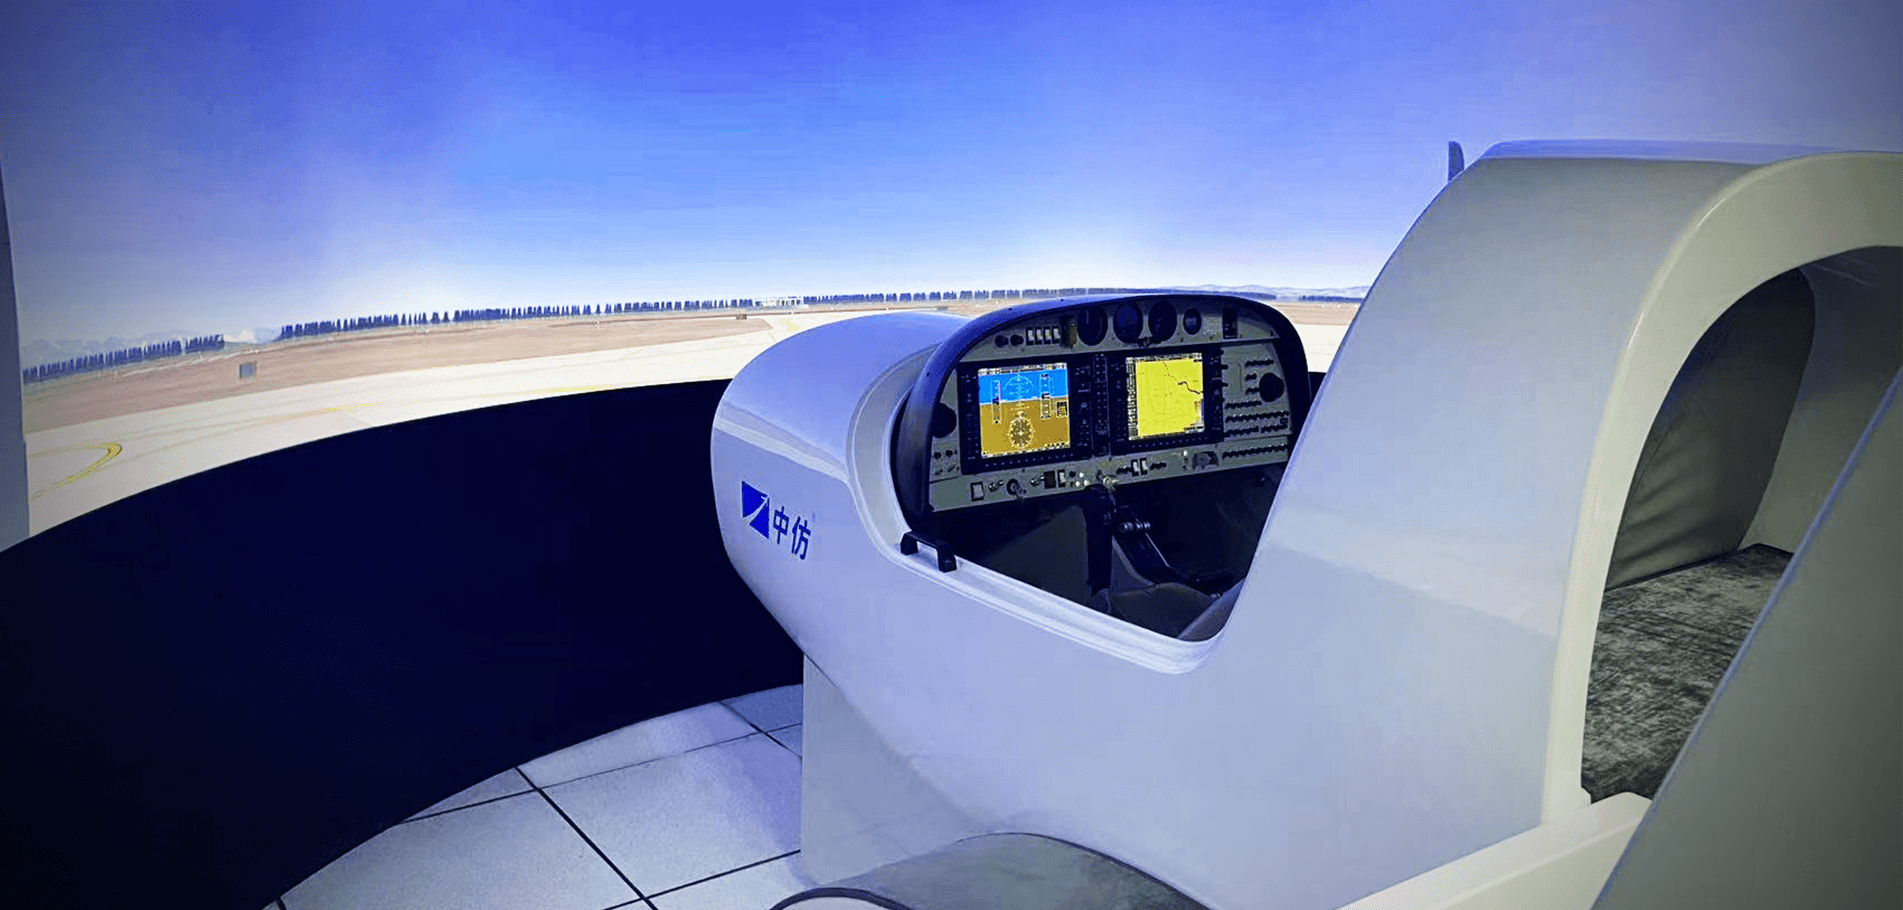 The New High-Tech Flight Training Device